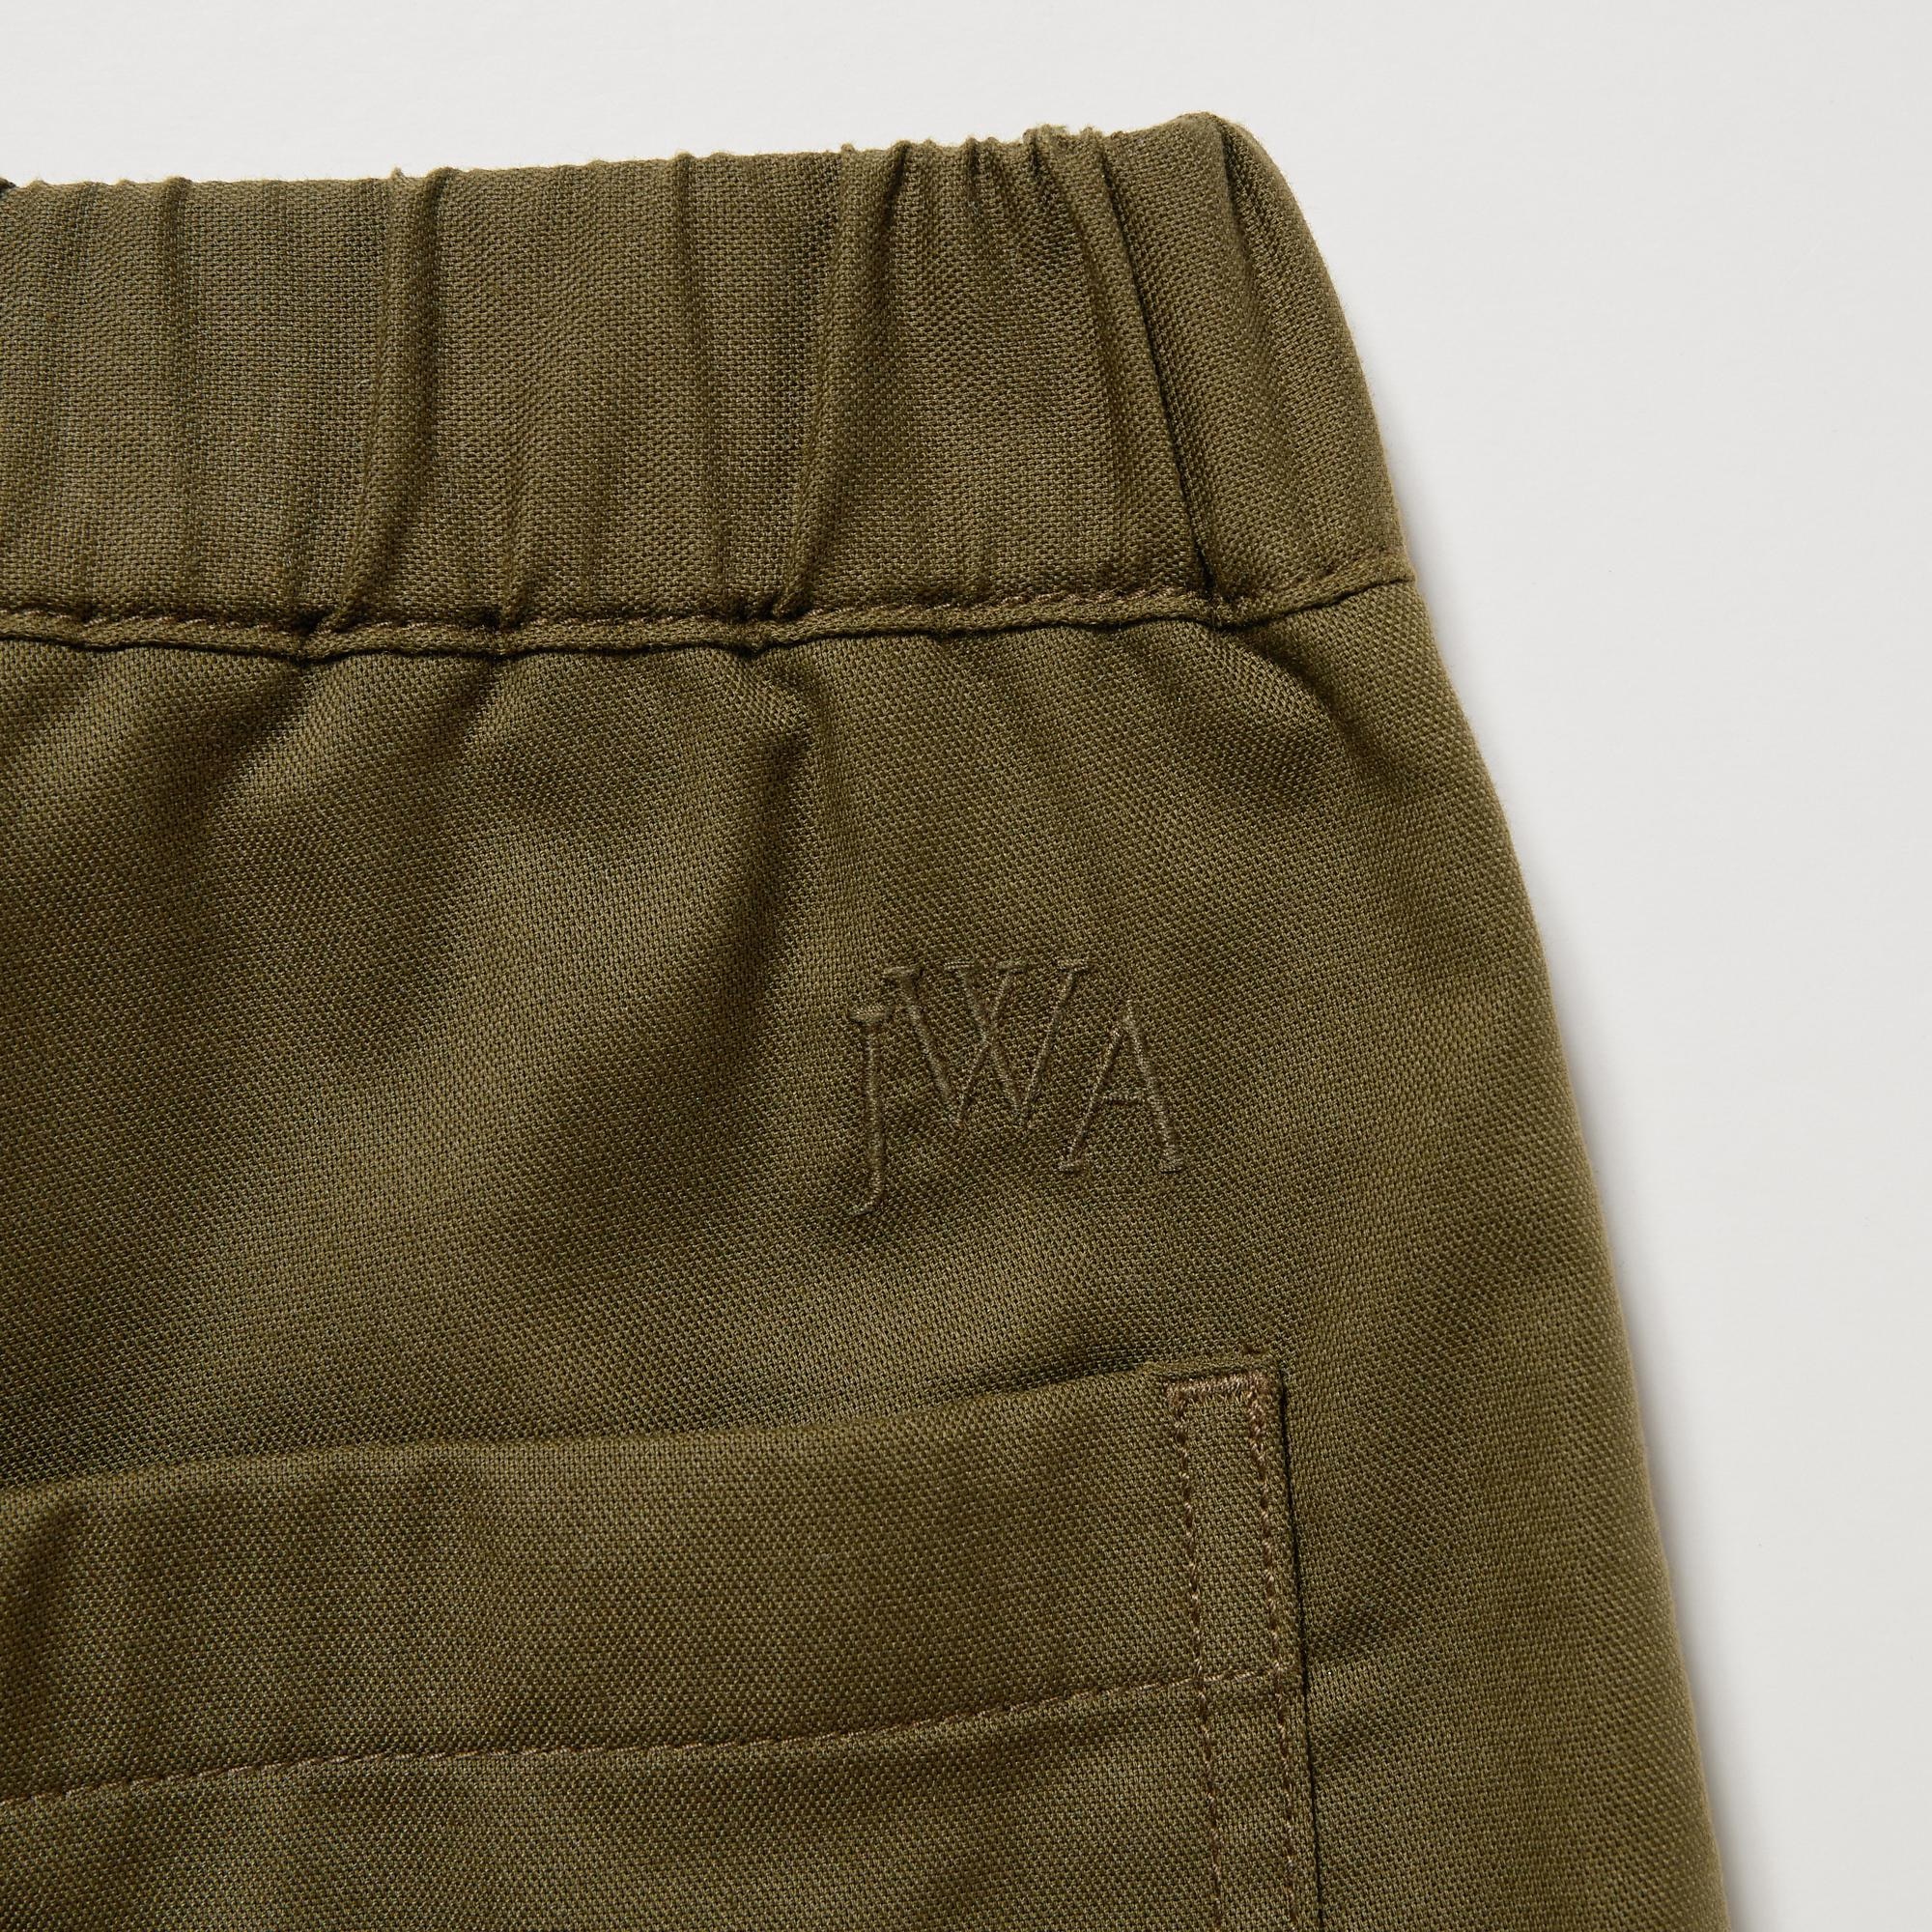 Uniqlo - Heattech Warm Lined Trousers - Green - S | £29.90 | Grazia